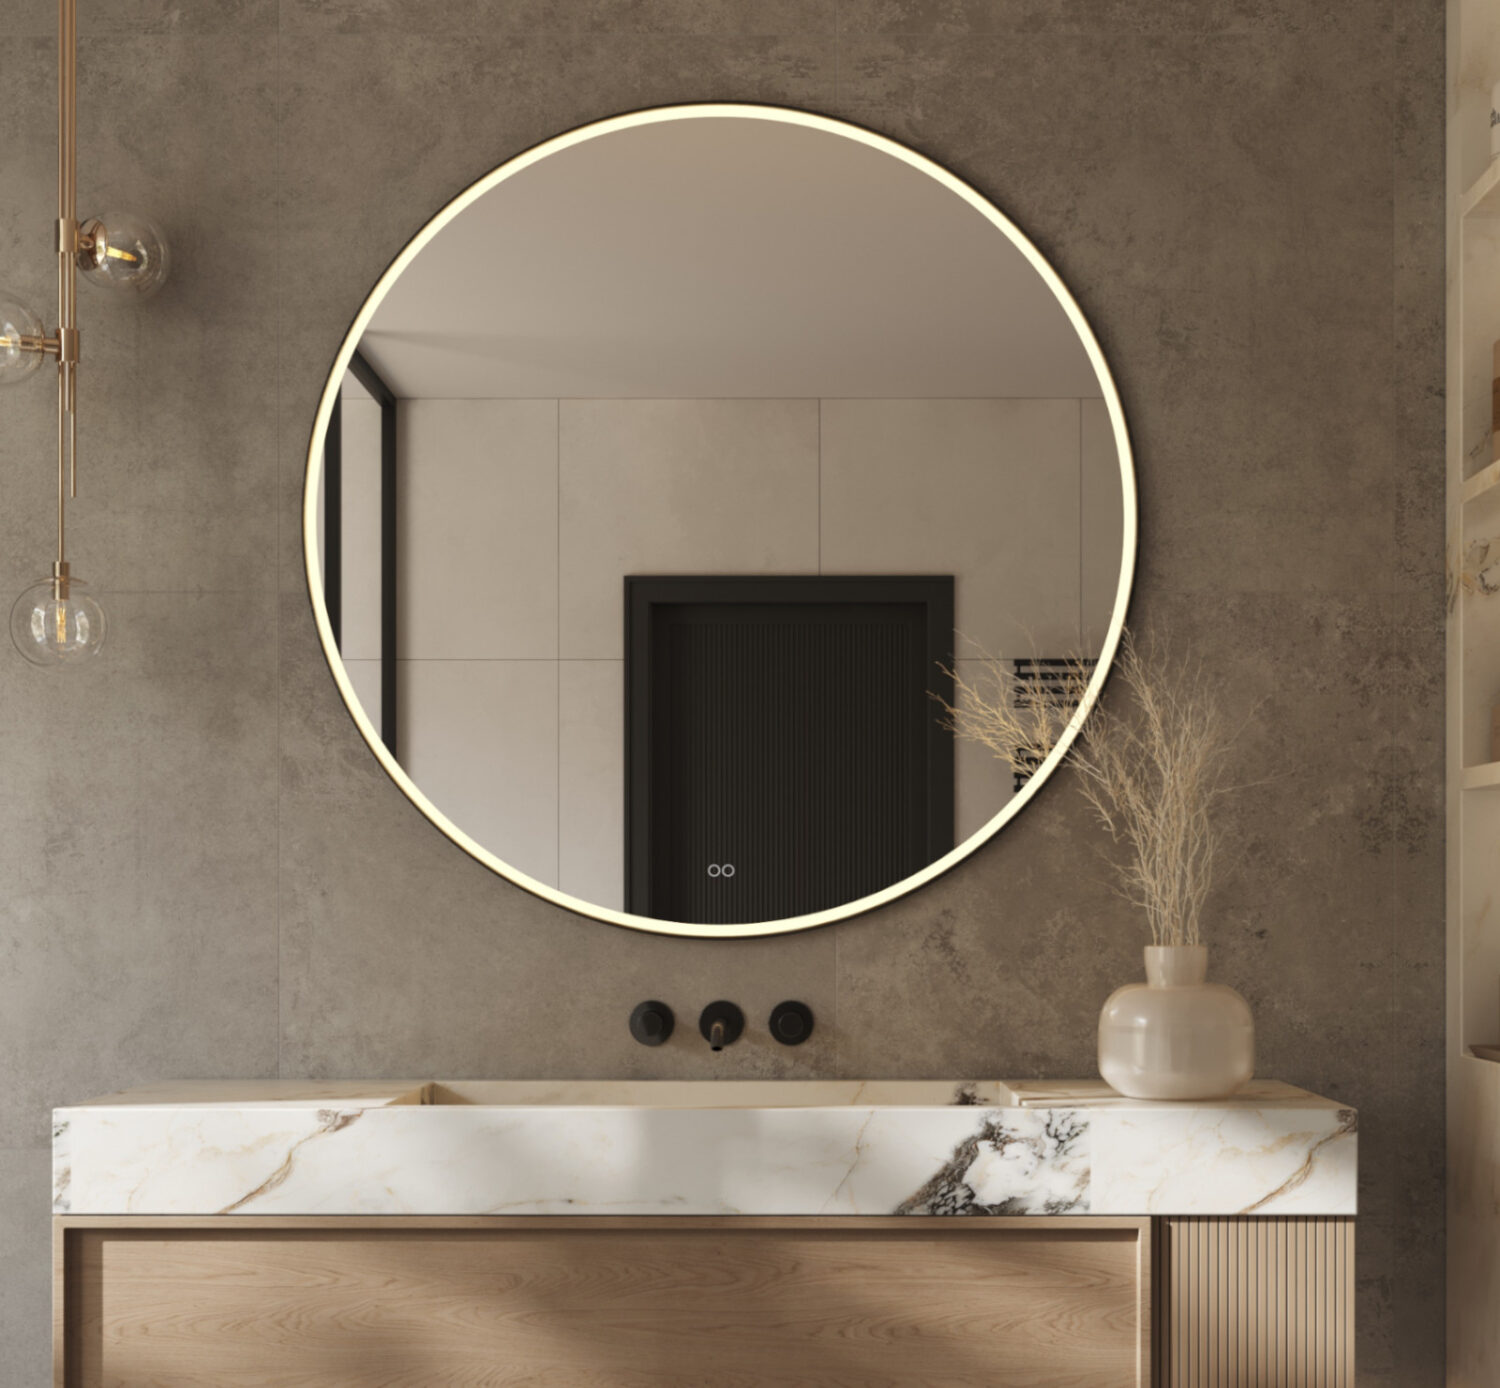 Ronde badkamerspiegel met LED verlichting, verwarming, instelbare dimfunctie en zwart frame 120x120 cm Designspiegels